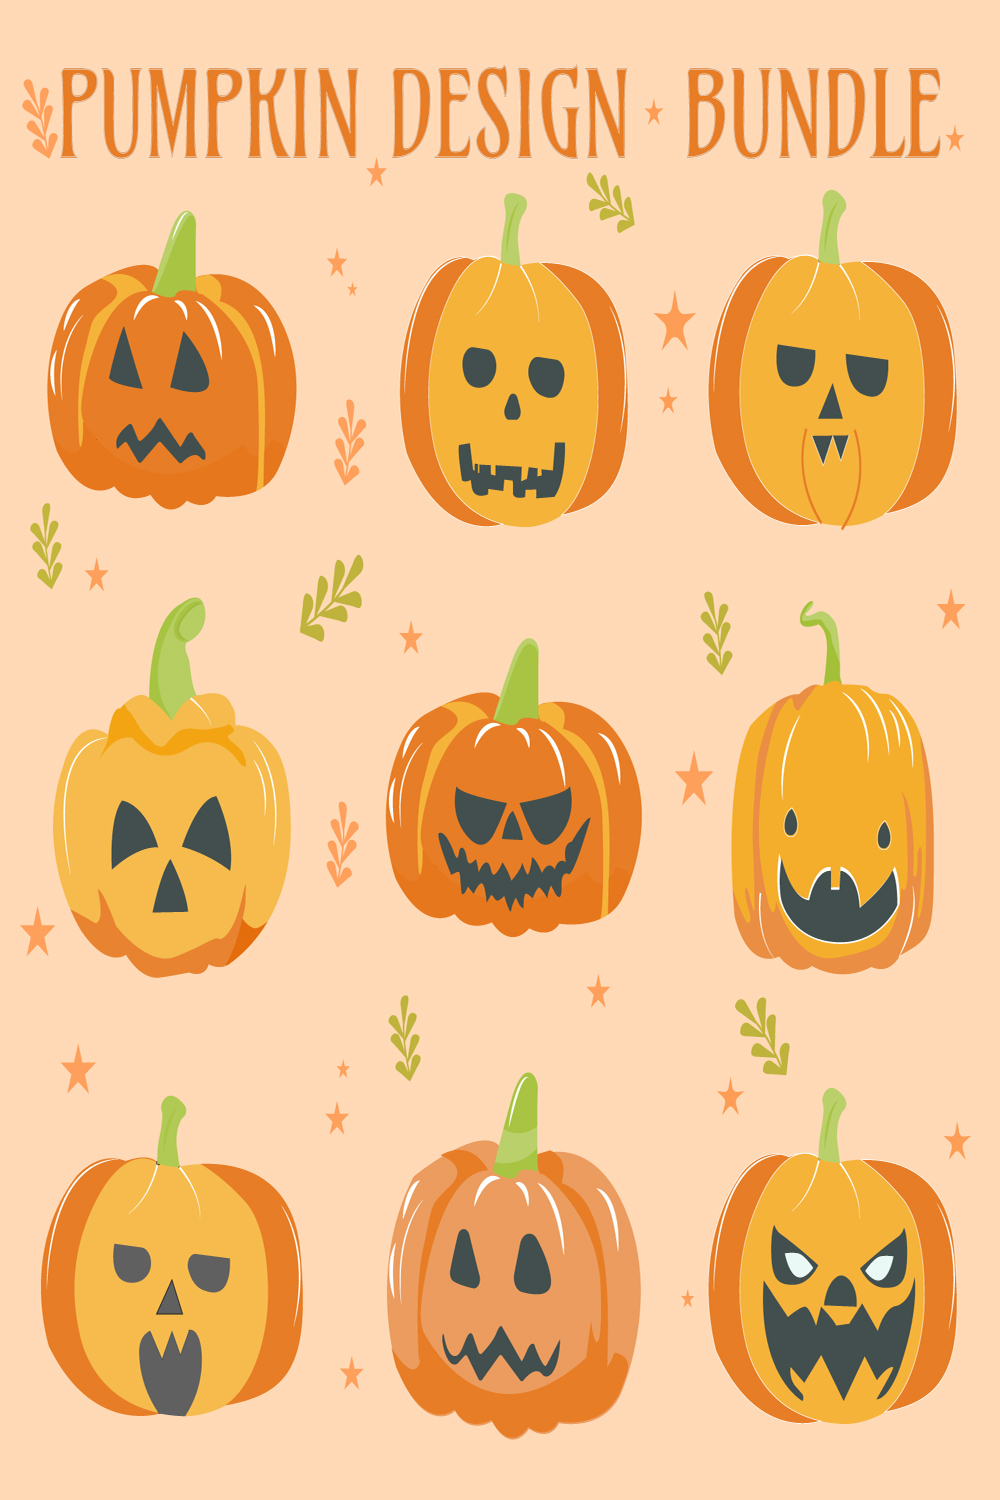 Set of Halloween Pumpkin bundle Vector Art, Clipart pumpkin vector elements pinterest preview image.